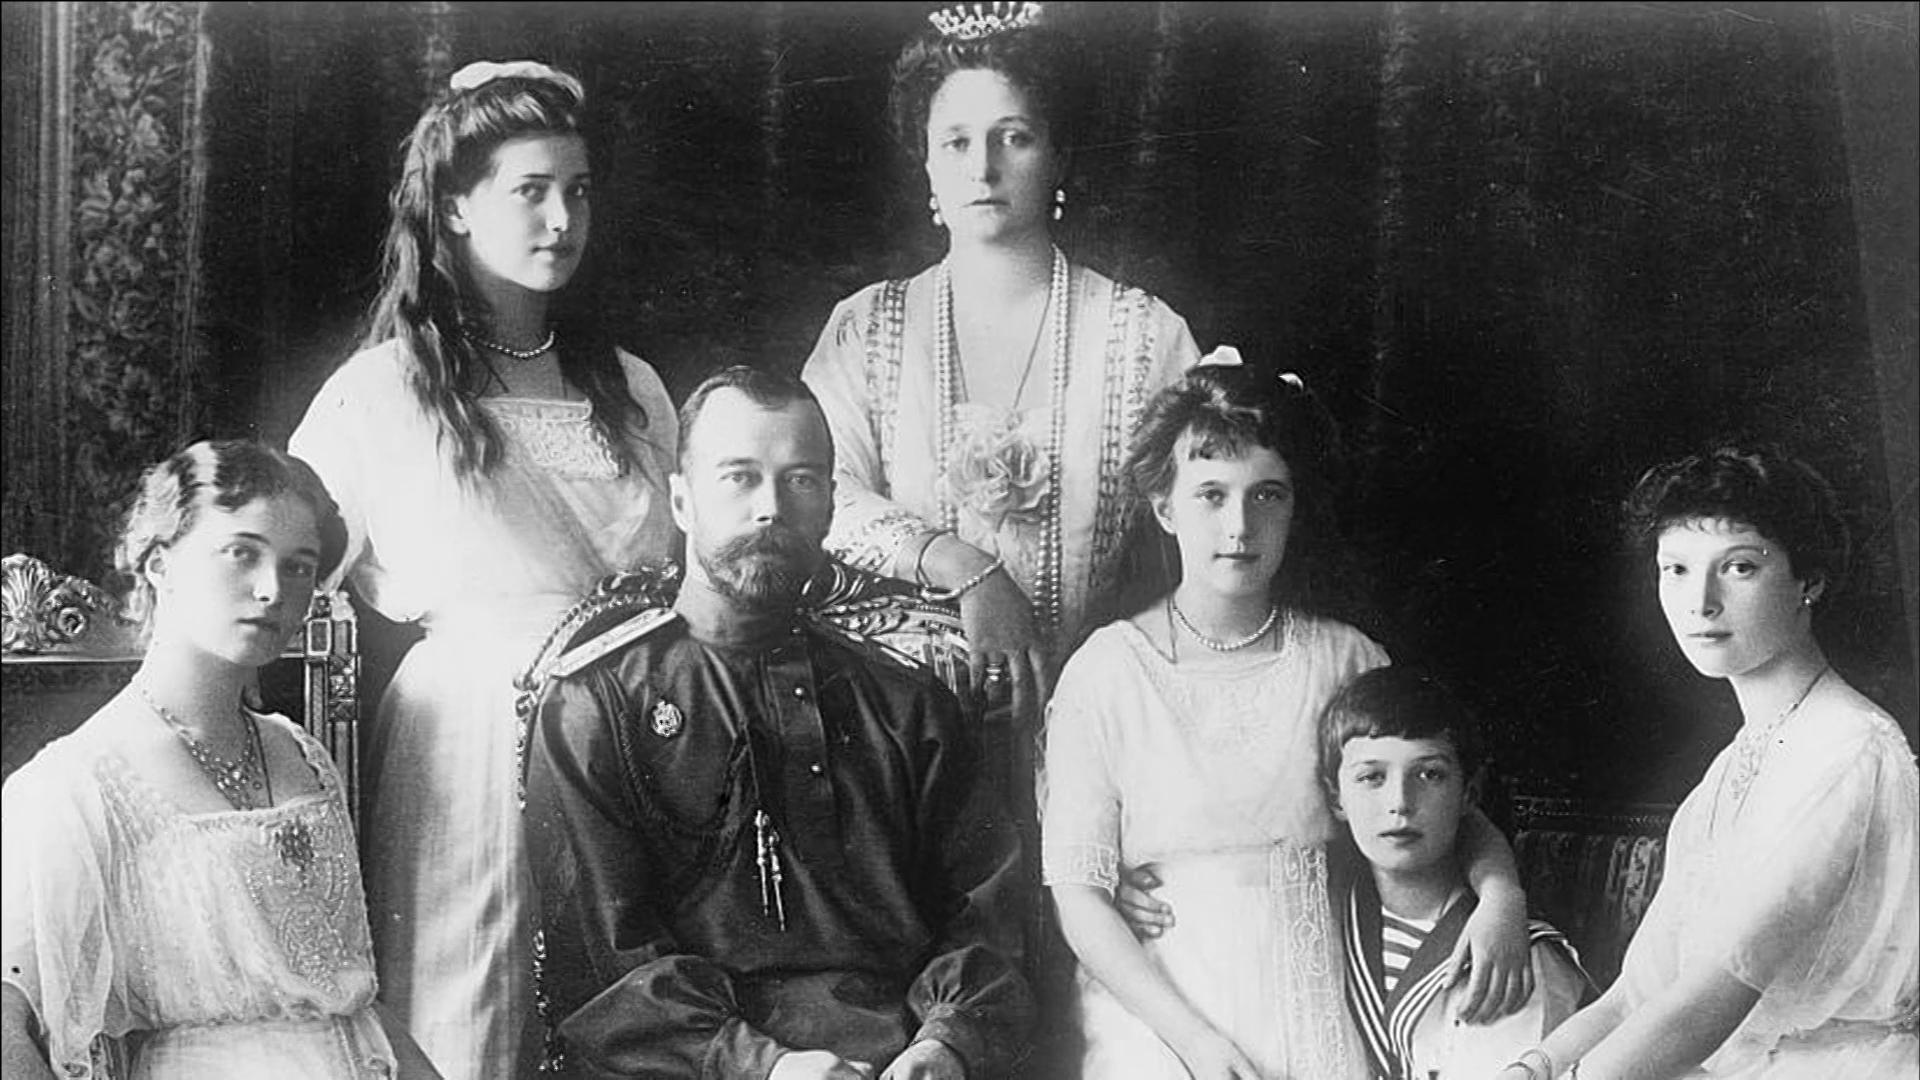 The Russian Imperial Romanov family - Tsar Nicholas II, his wife Tsarina Alexandra and their five children Olga, Tatiana, Maria, Anastasia, and Alexei.